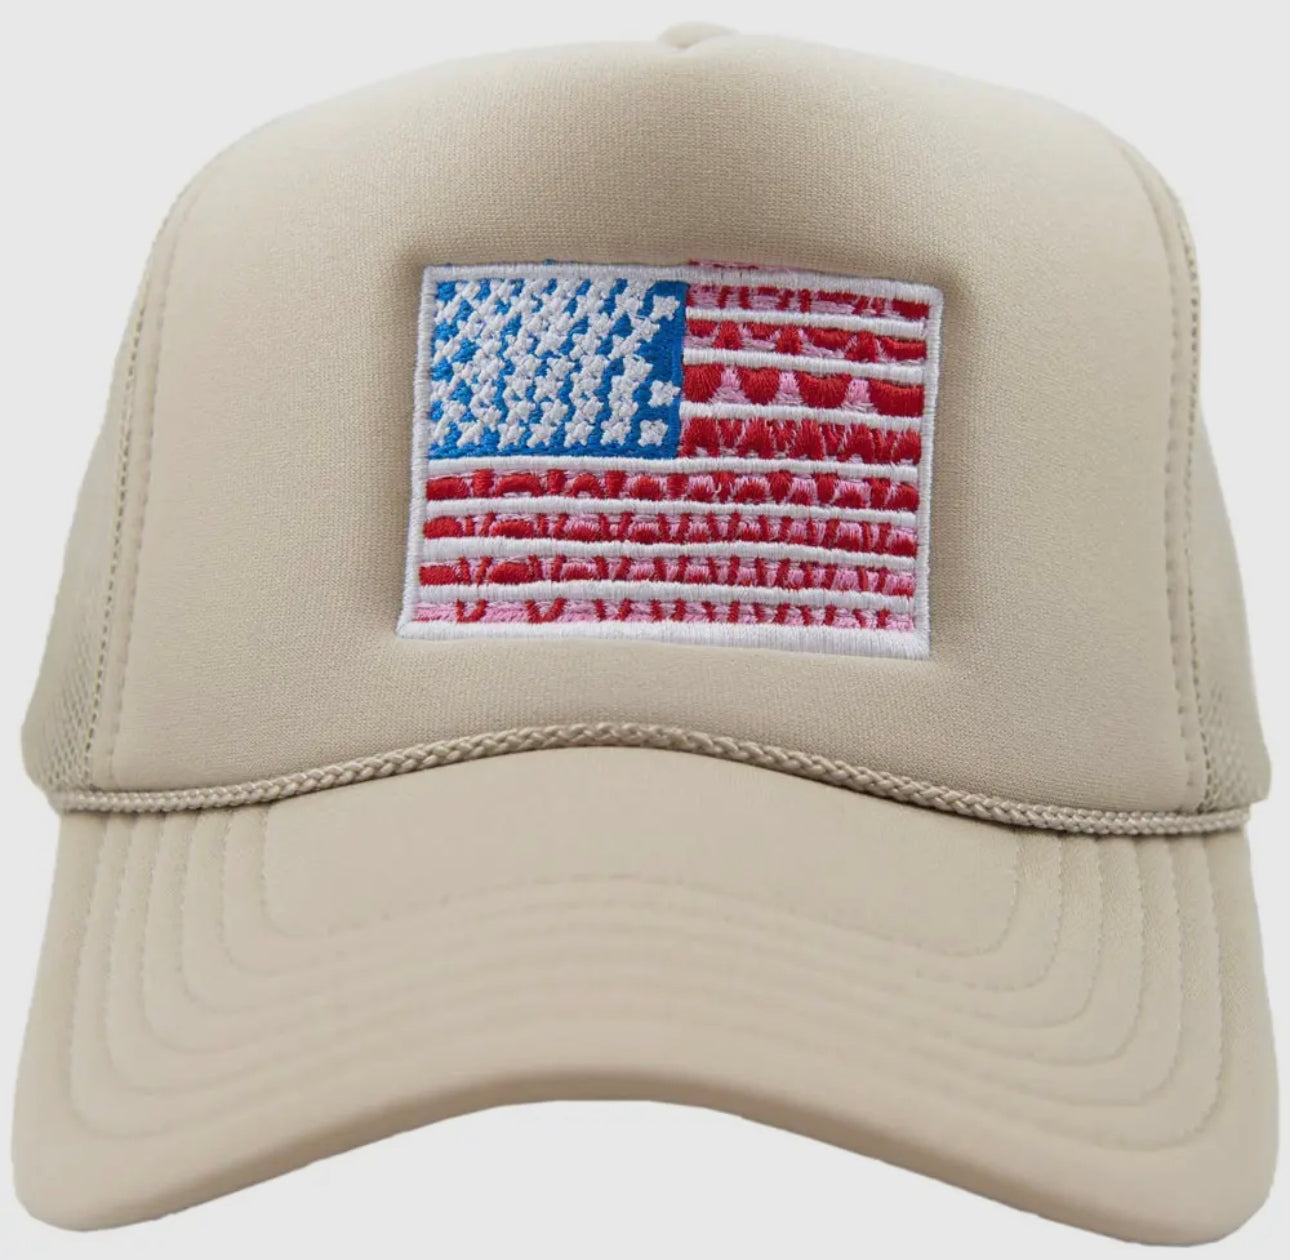 Trucker Hats (lots of options)